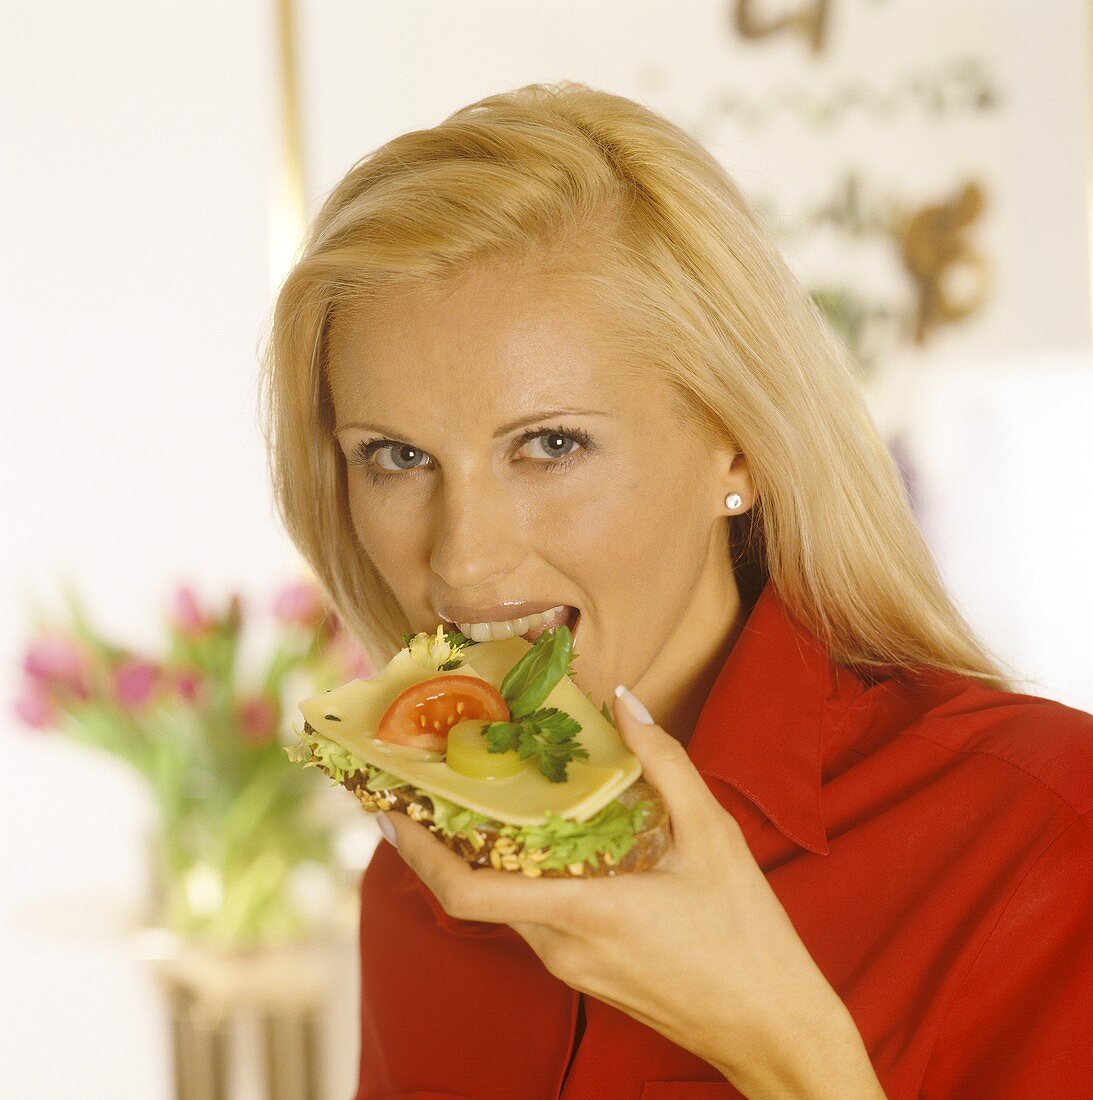 Woman eating a cheese sandwich